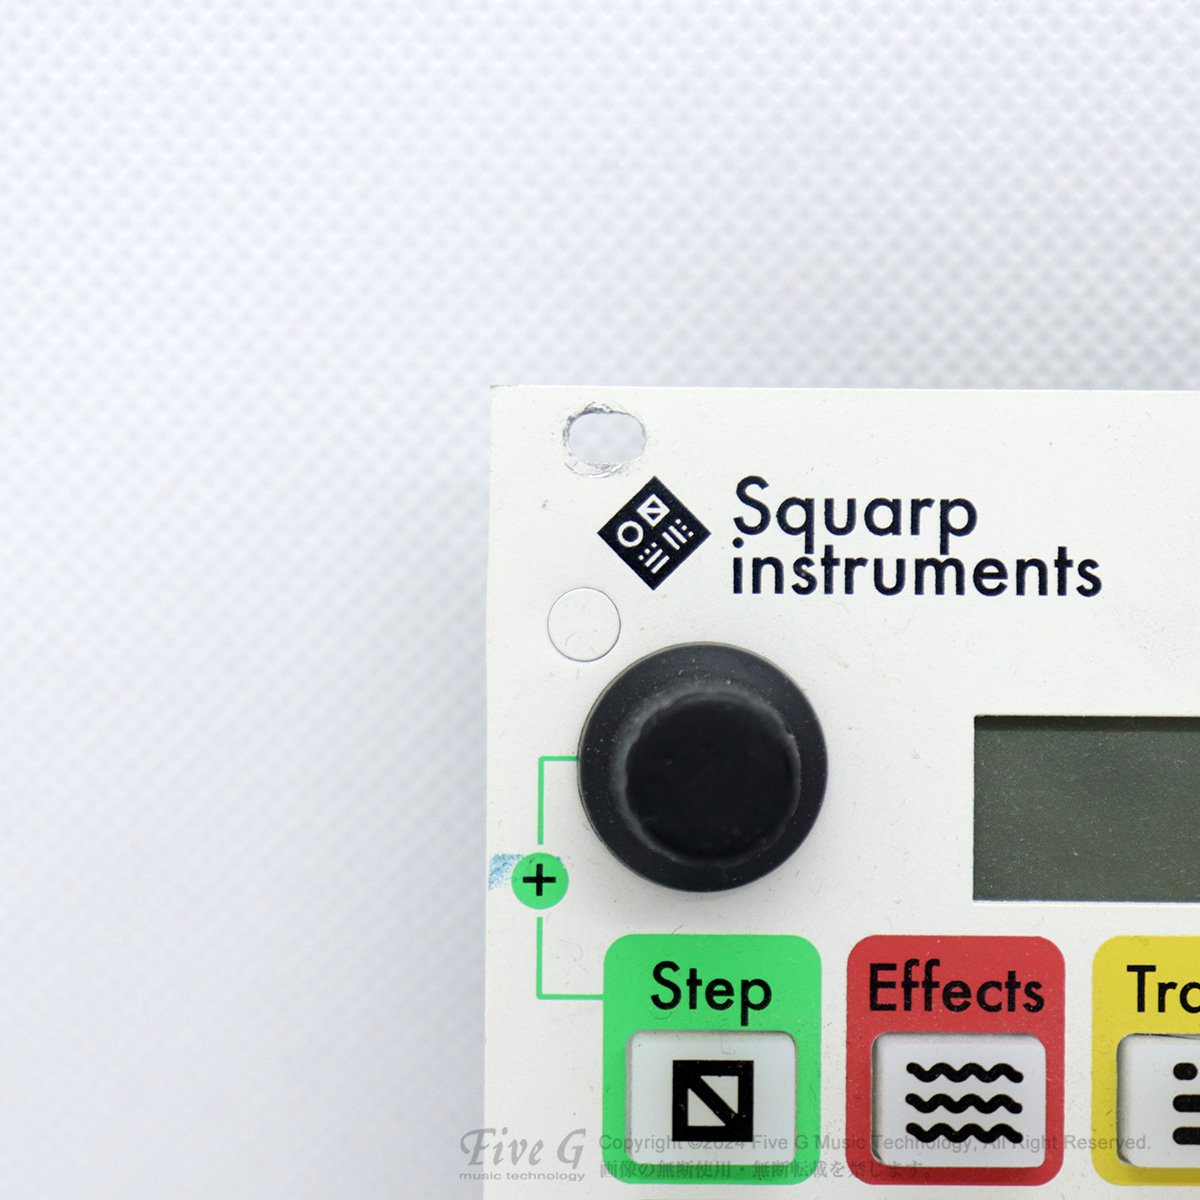 Squarp Instruments | Hermod【B級品特価】| シーケンサー | Five G 